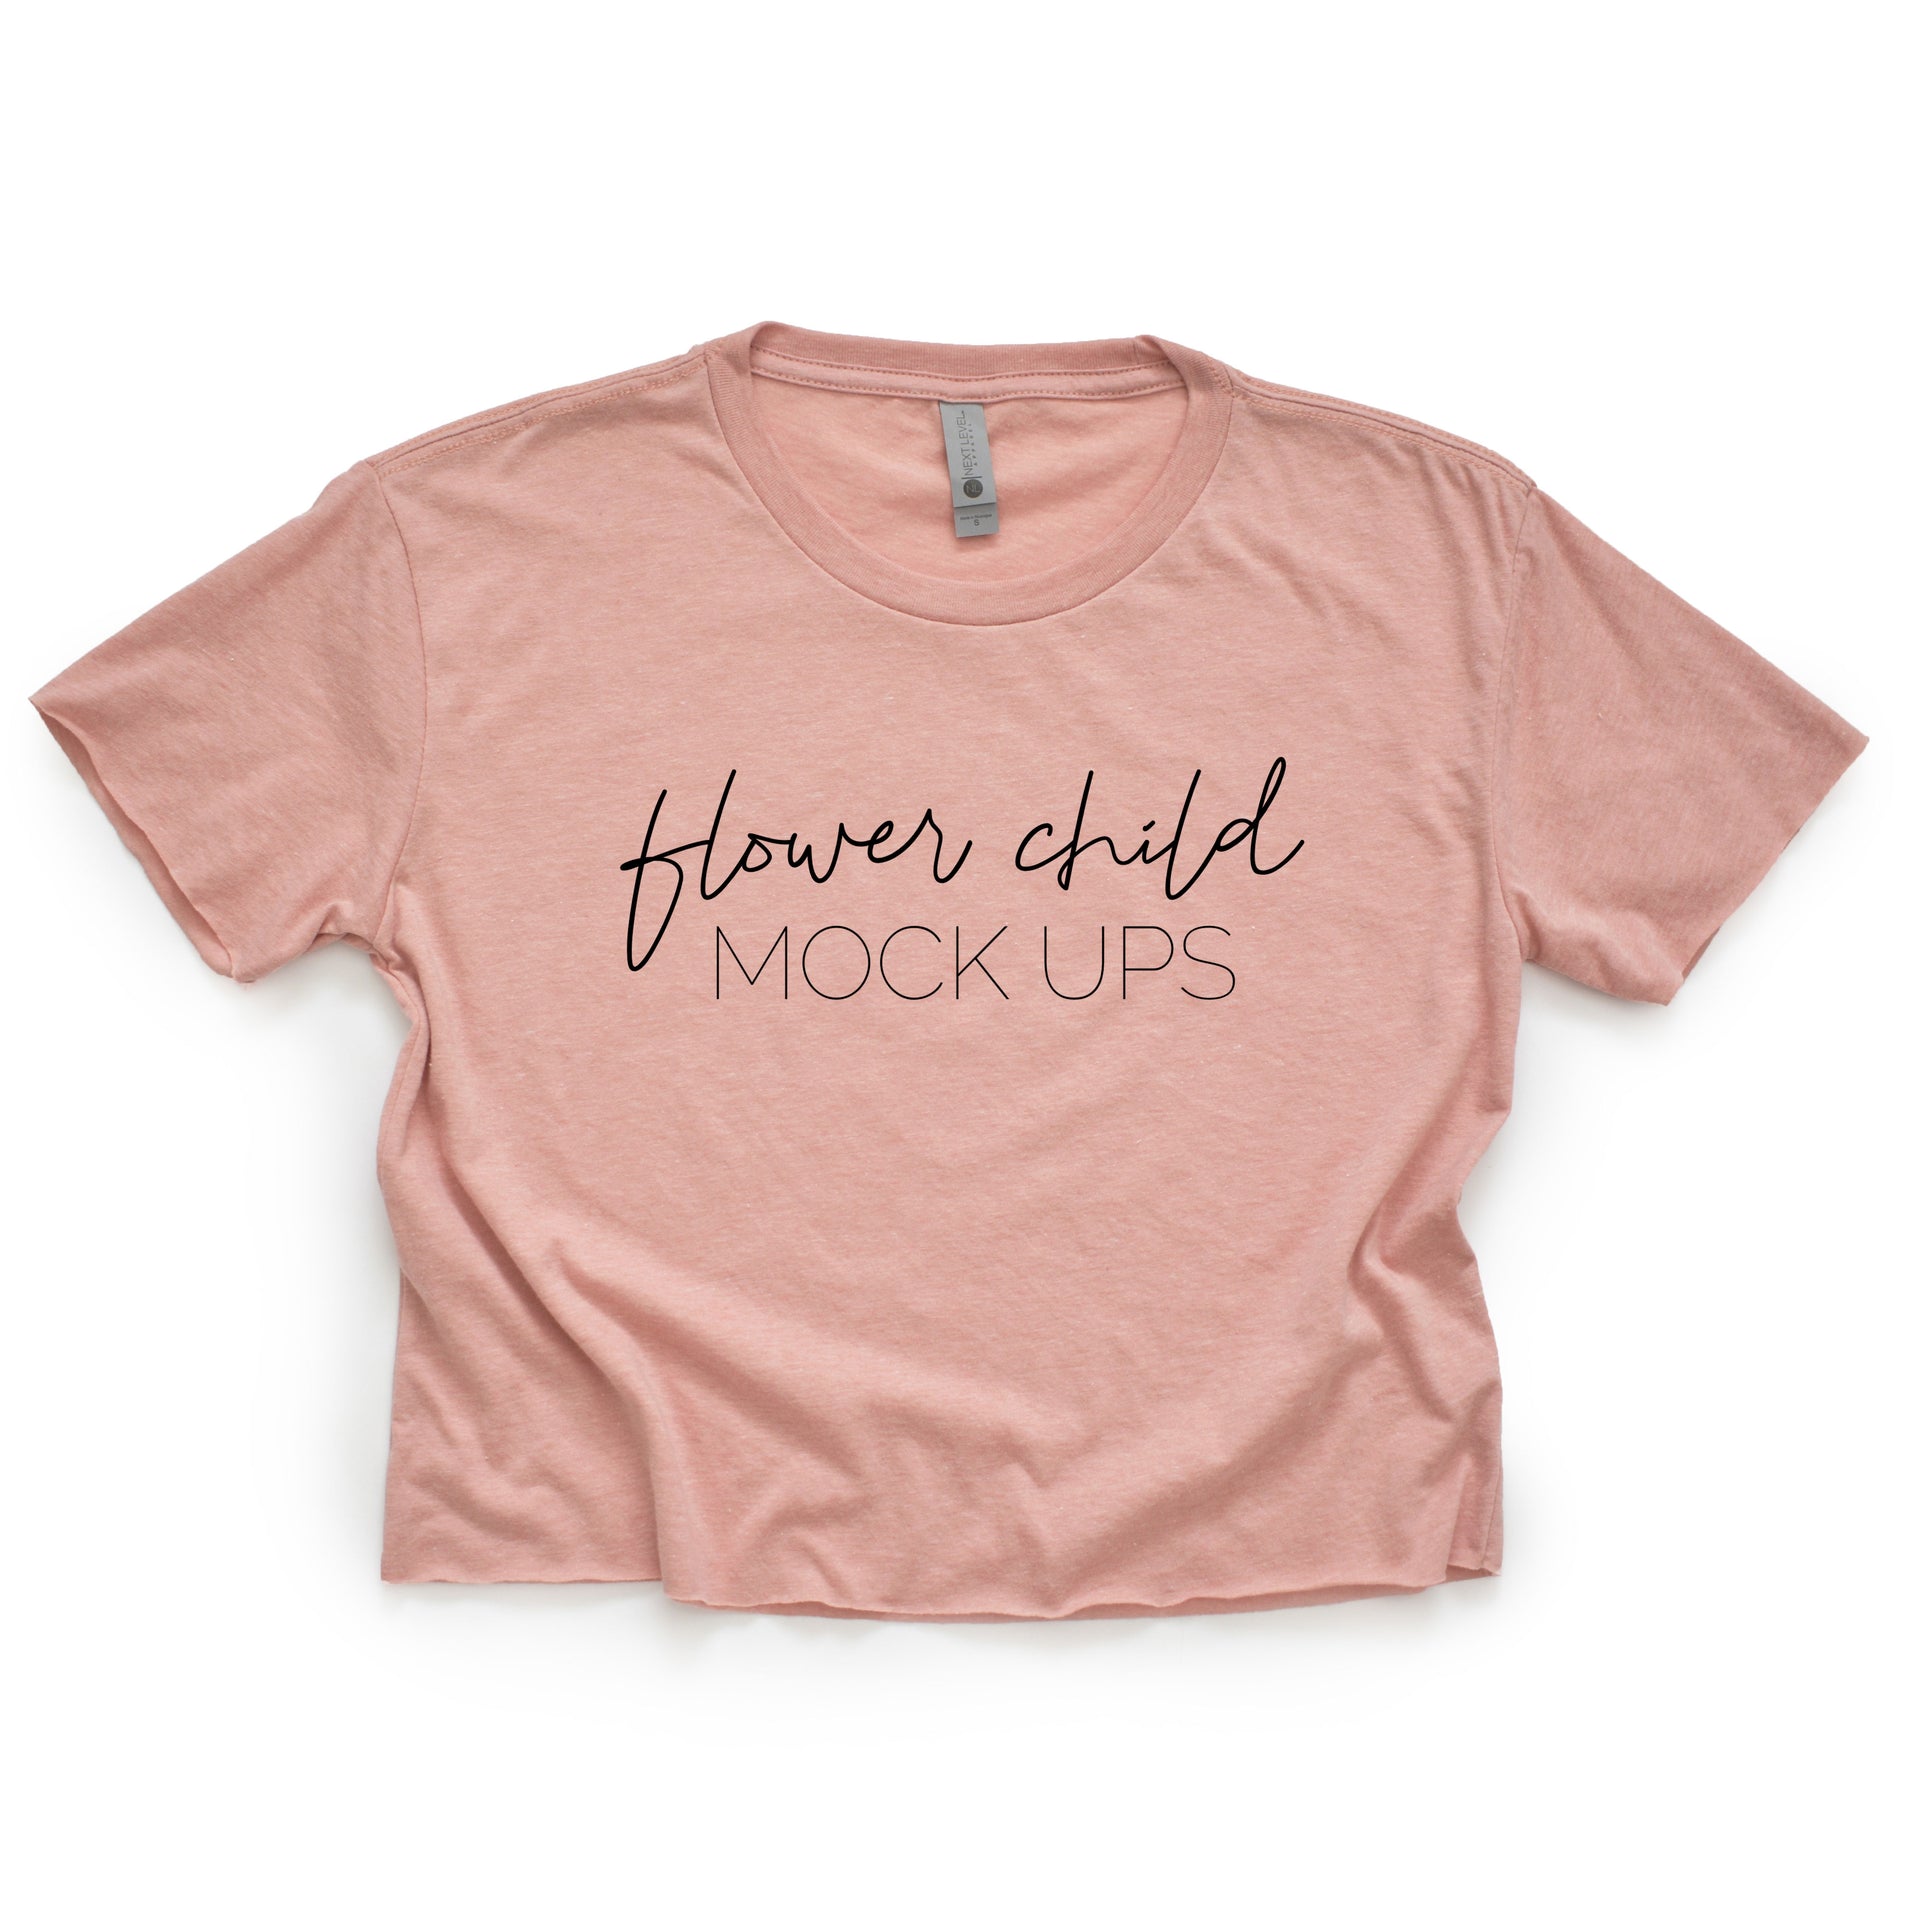 Sweetheart Pink Promise - Dewy Petaled Rosebud Unfurling Kids T-Shirt for  Sale by Georgia Mizuleva